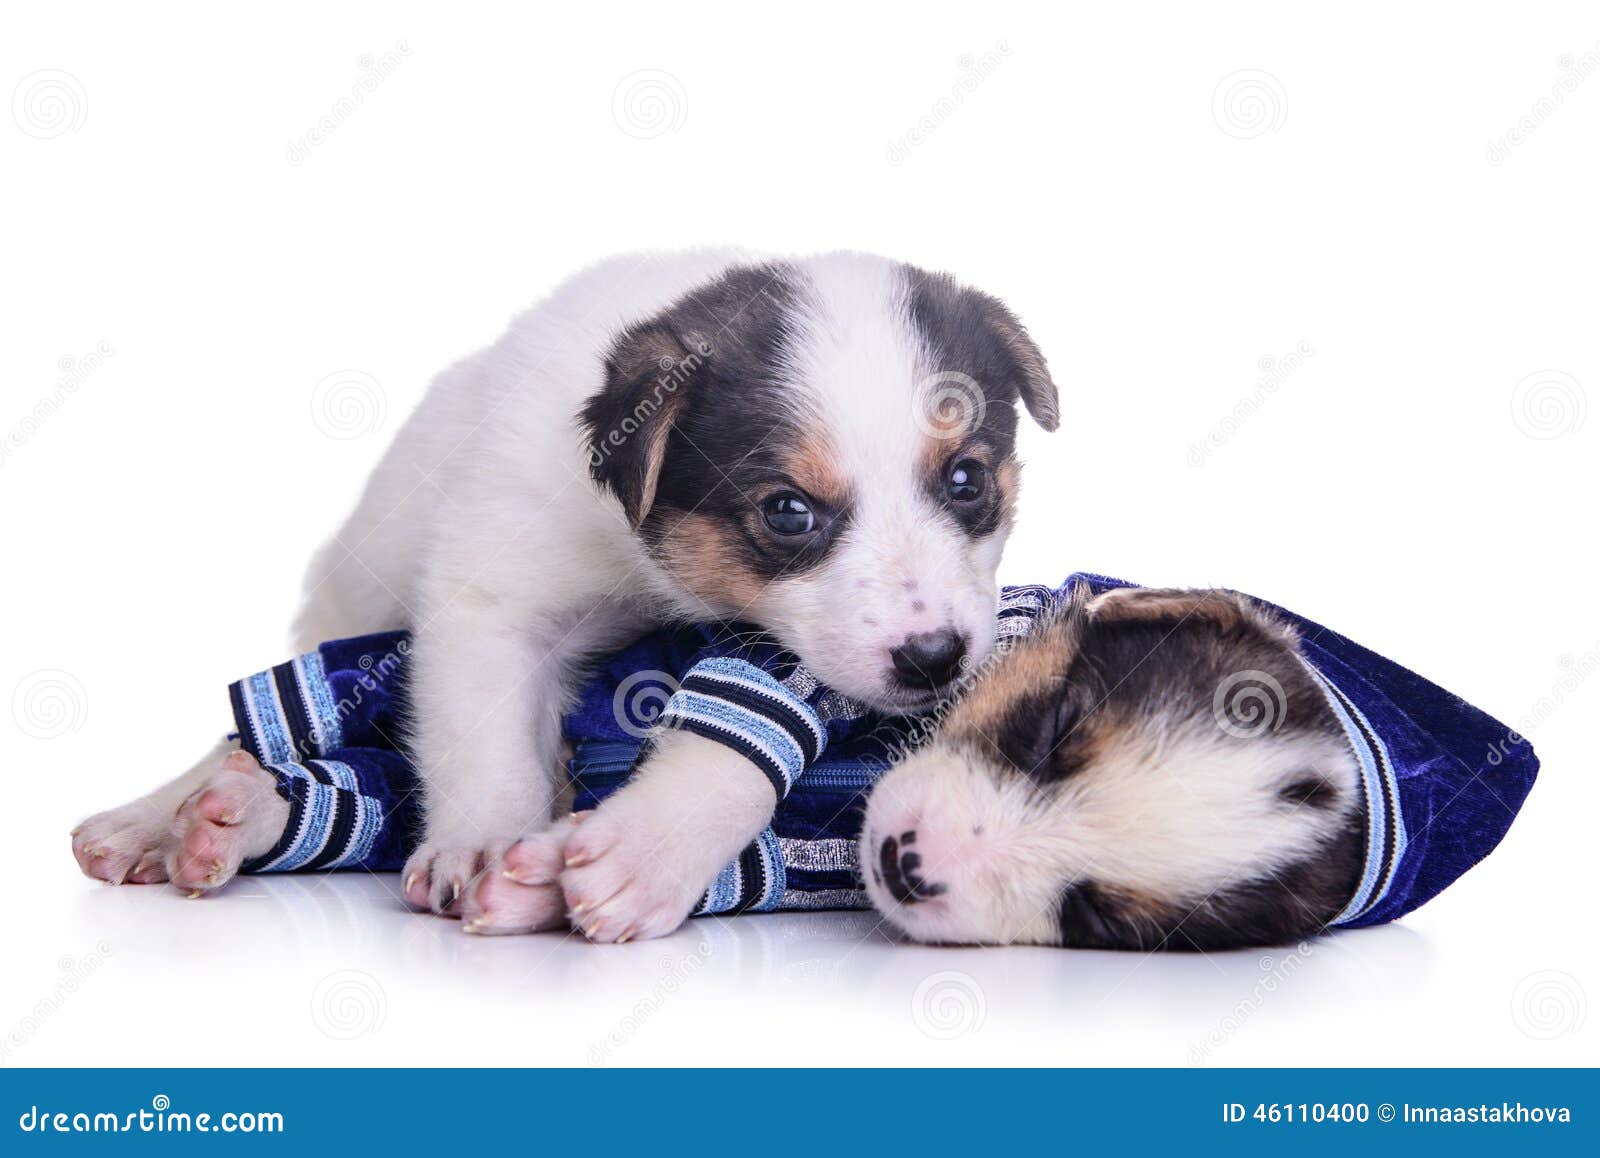 clothing puppies mestizo resting